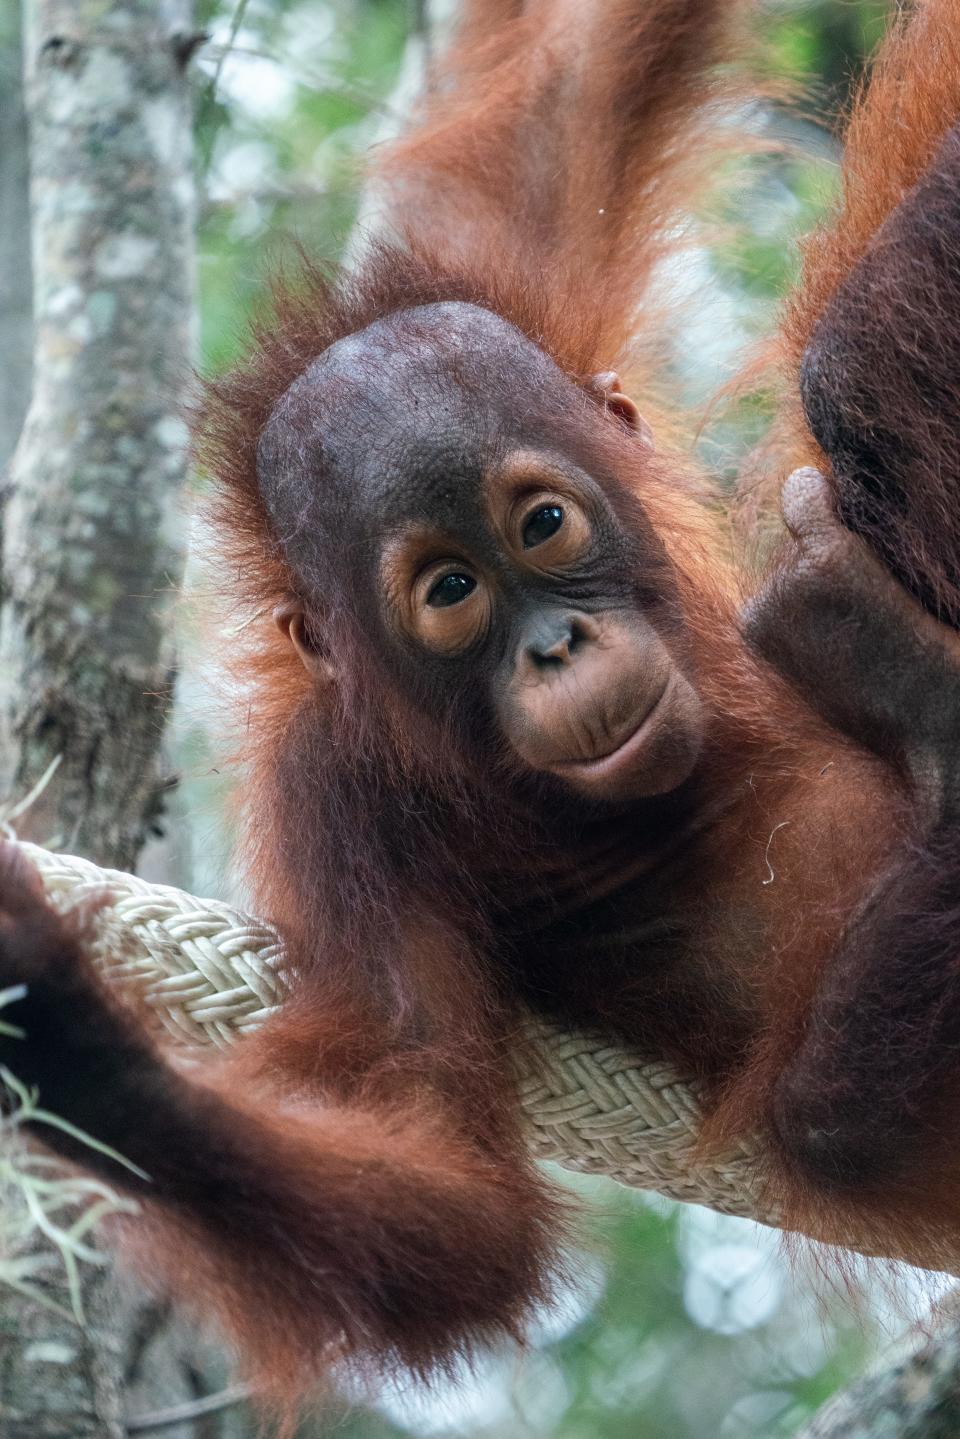 Riplee the orangutan at the Naples Zoo